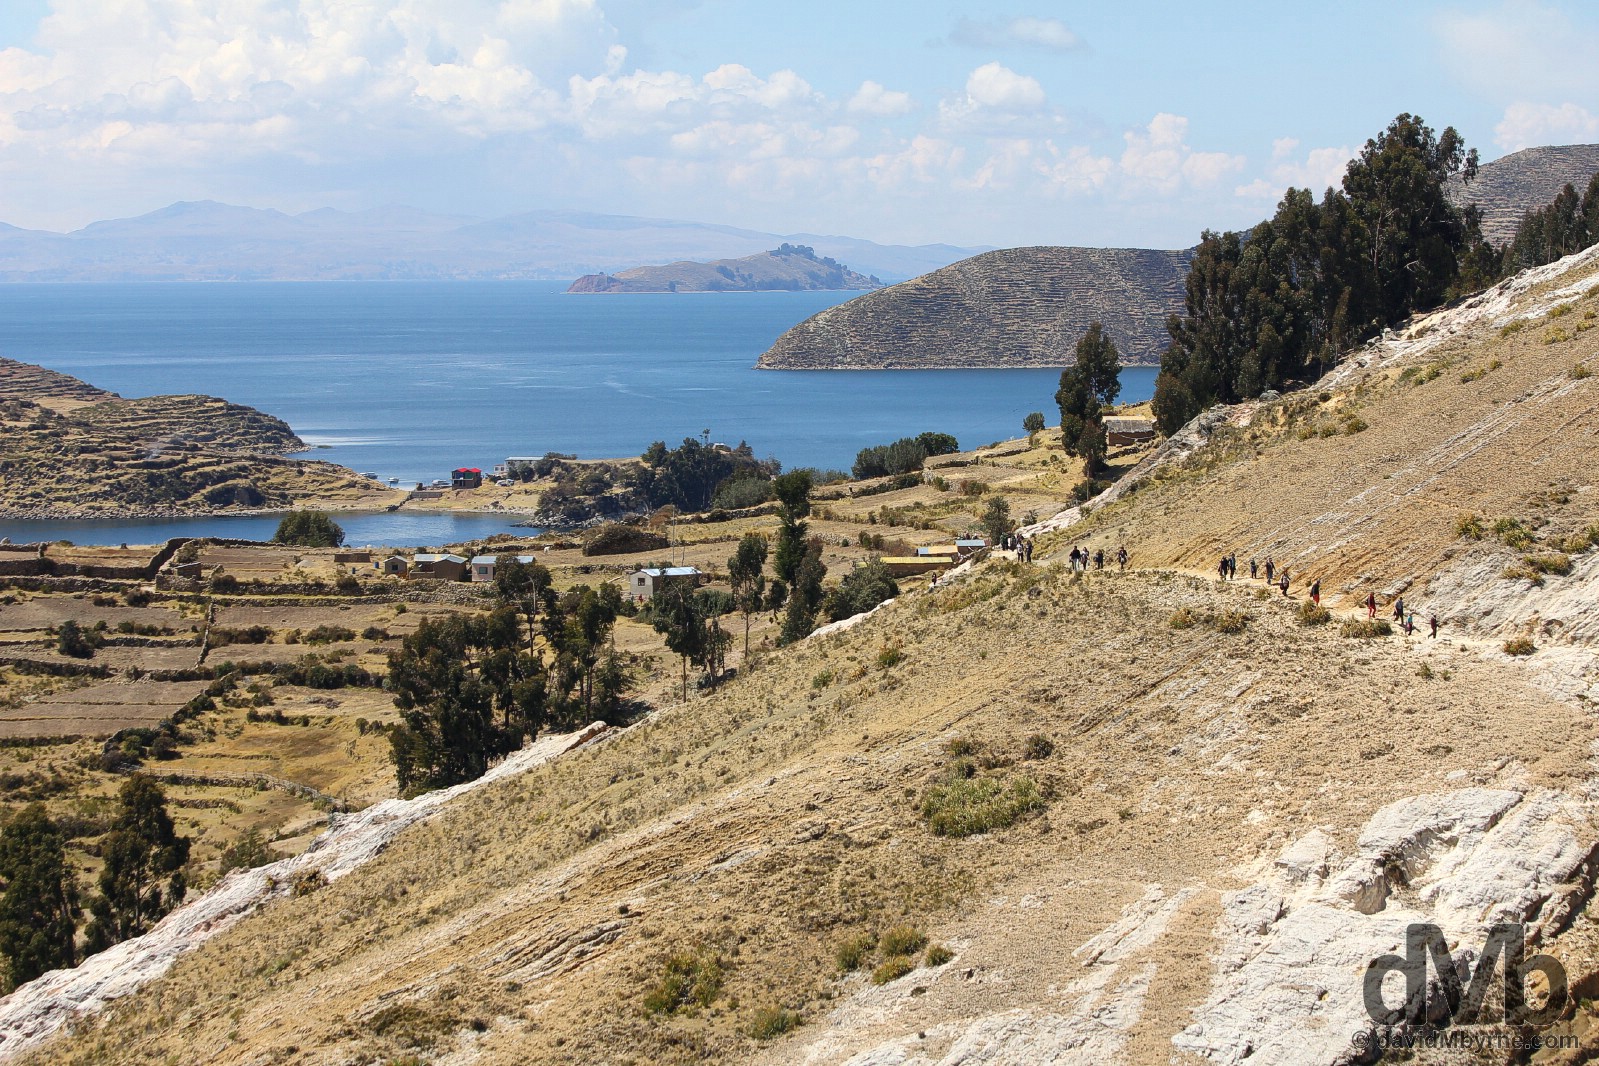 Walking on Isla del Sol in Lake Titicaca, Bolivia. August 24, 2015.